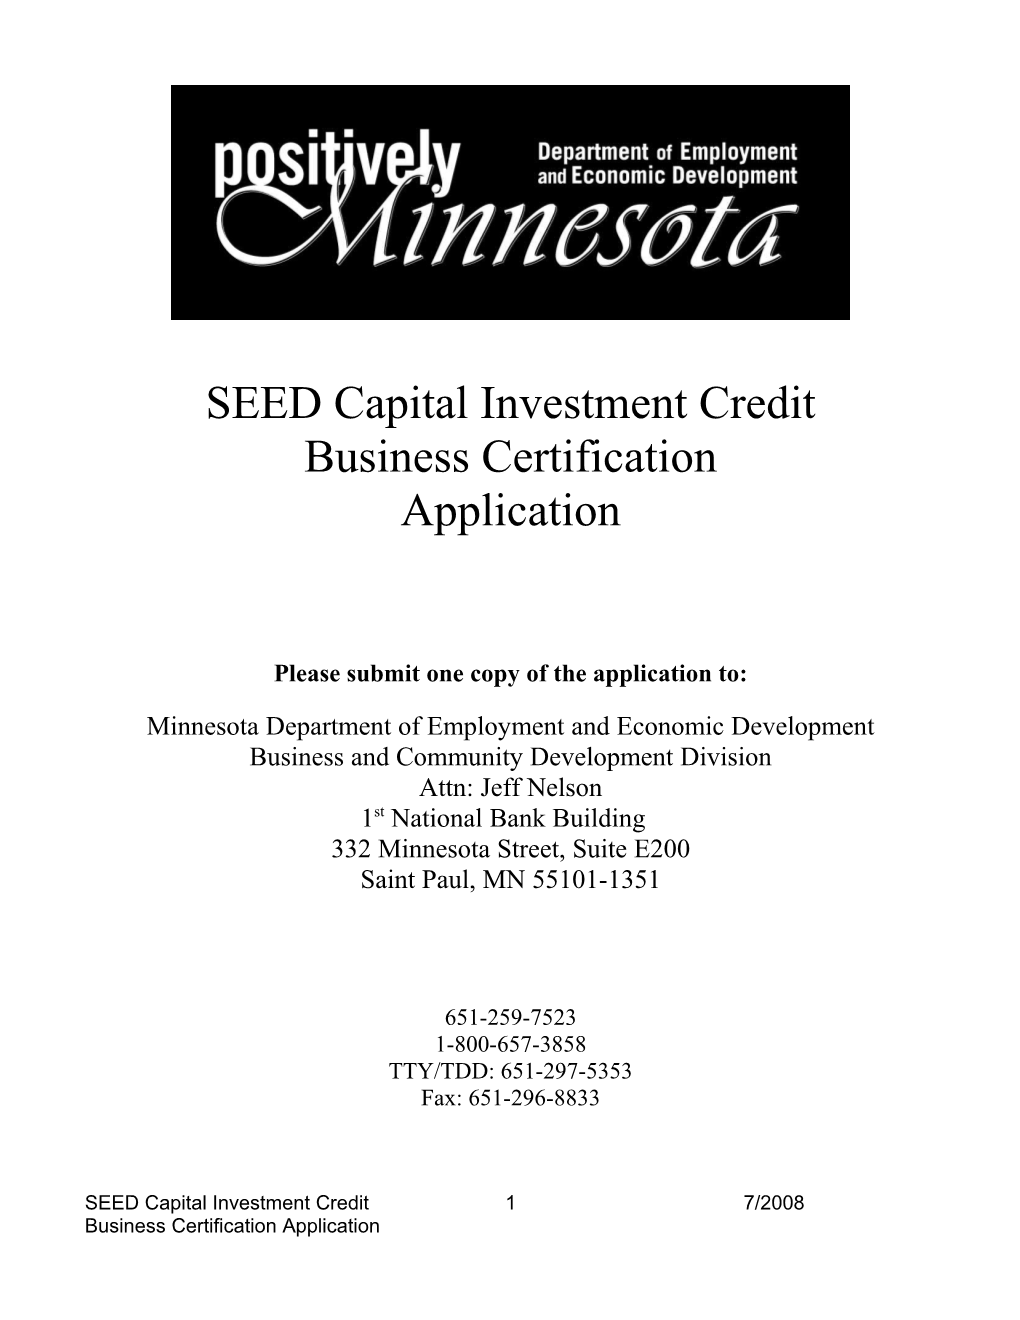 Minnesota Minerals 21St Century Fund Application